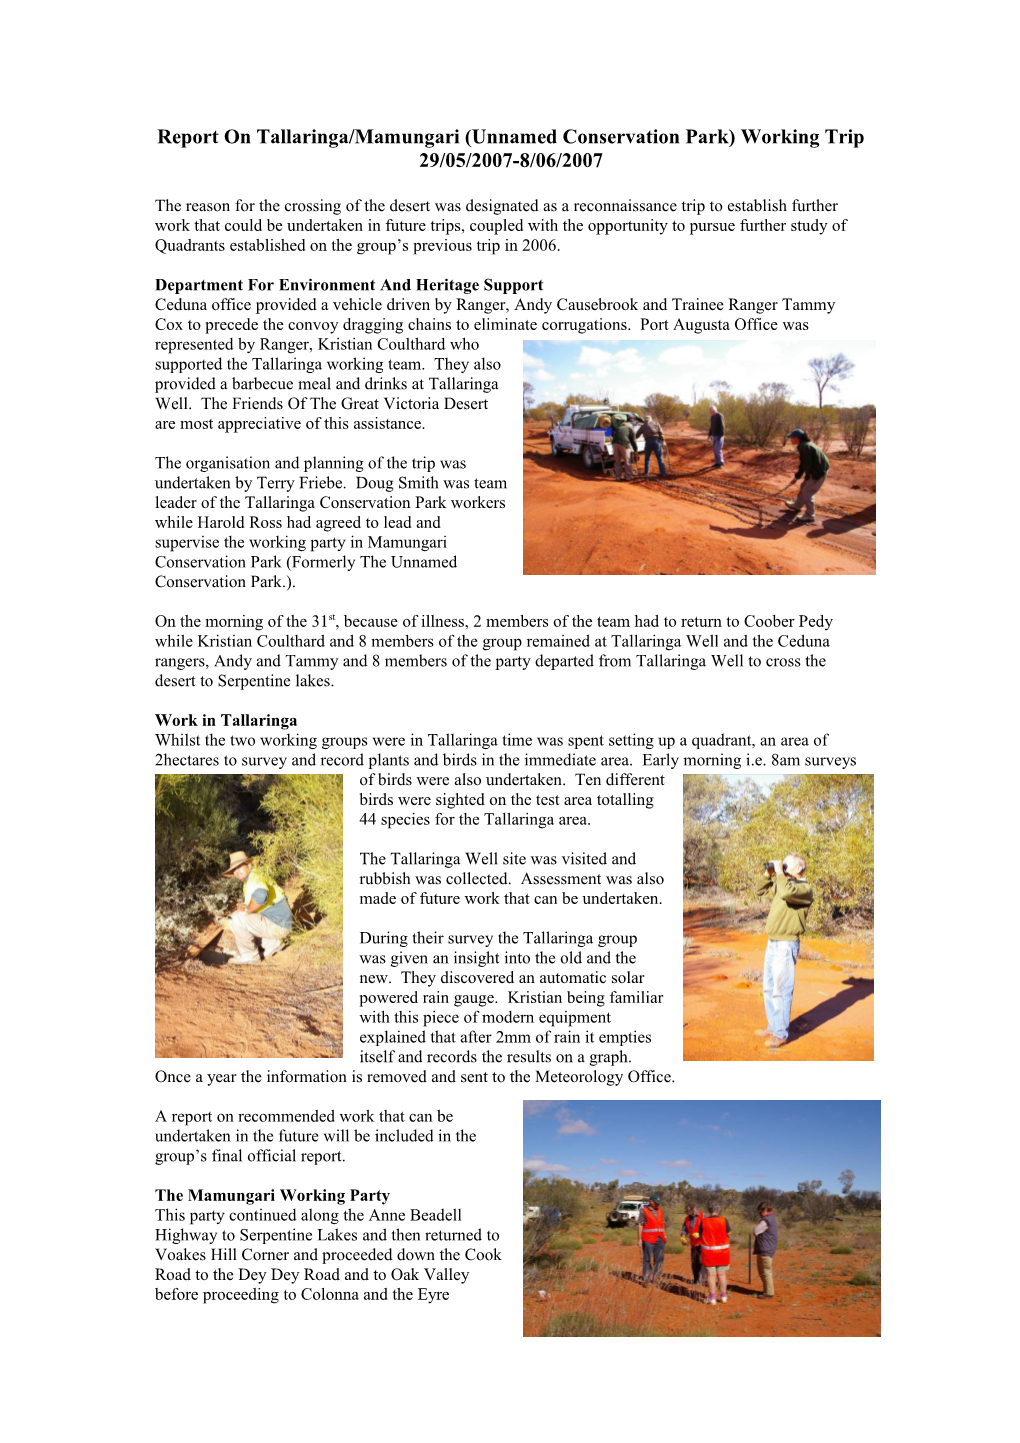 Report on Tallaringa/Mamungari (Unnamed Conservation Park) Working Trip 29/05/2007-8/06/2007